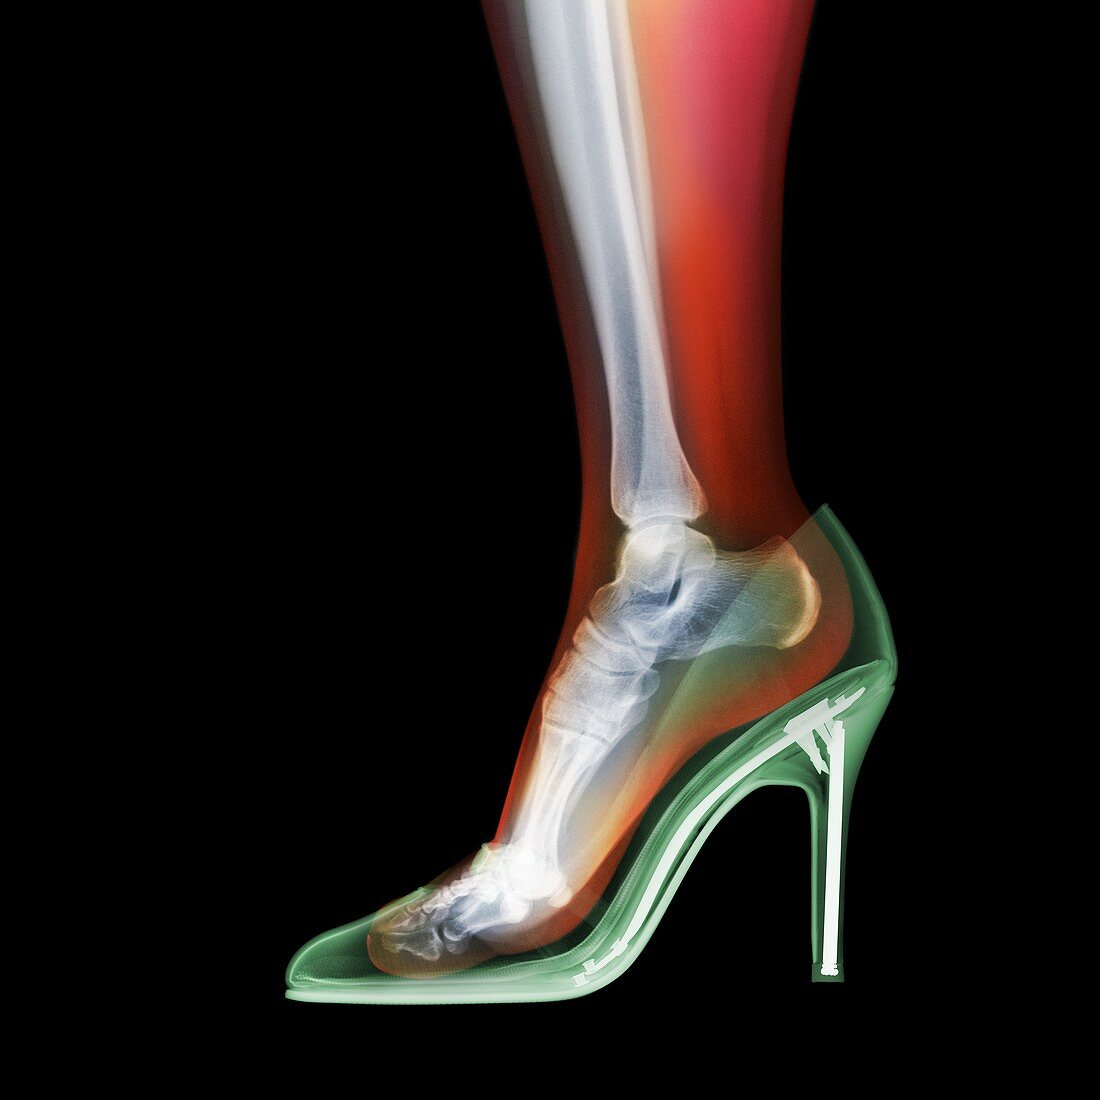 Human leg and stiletto shoe, X-ray